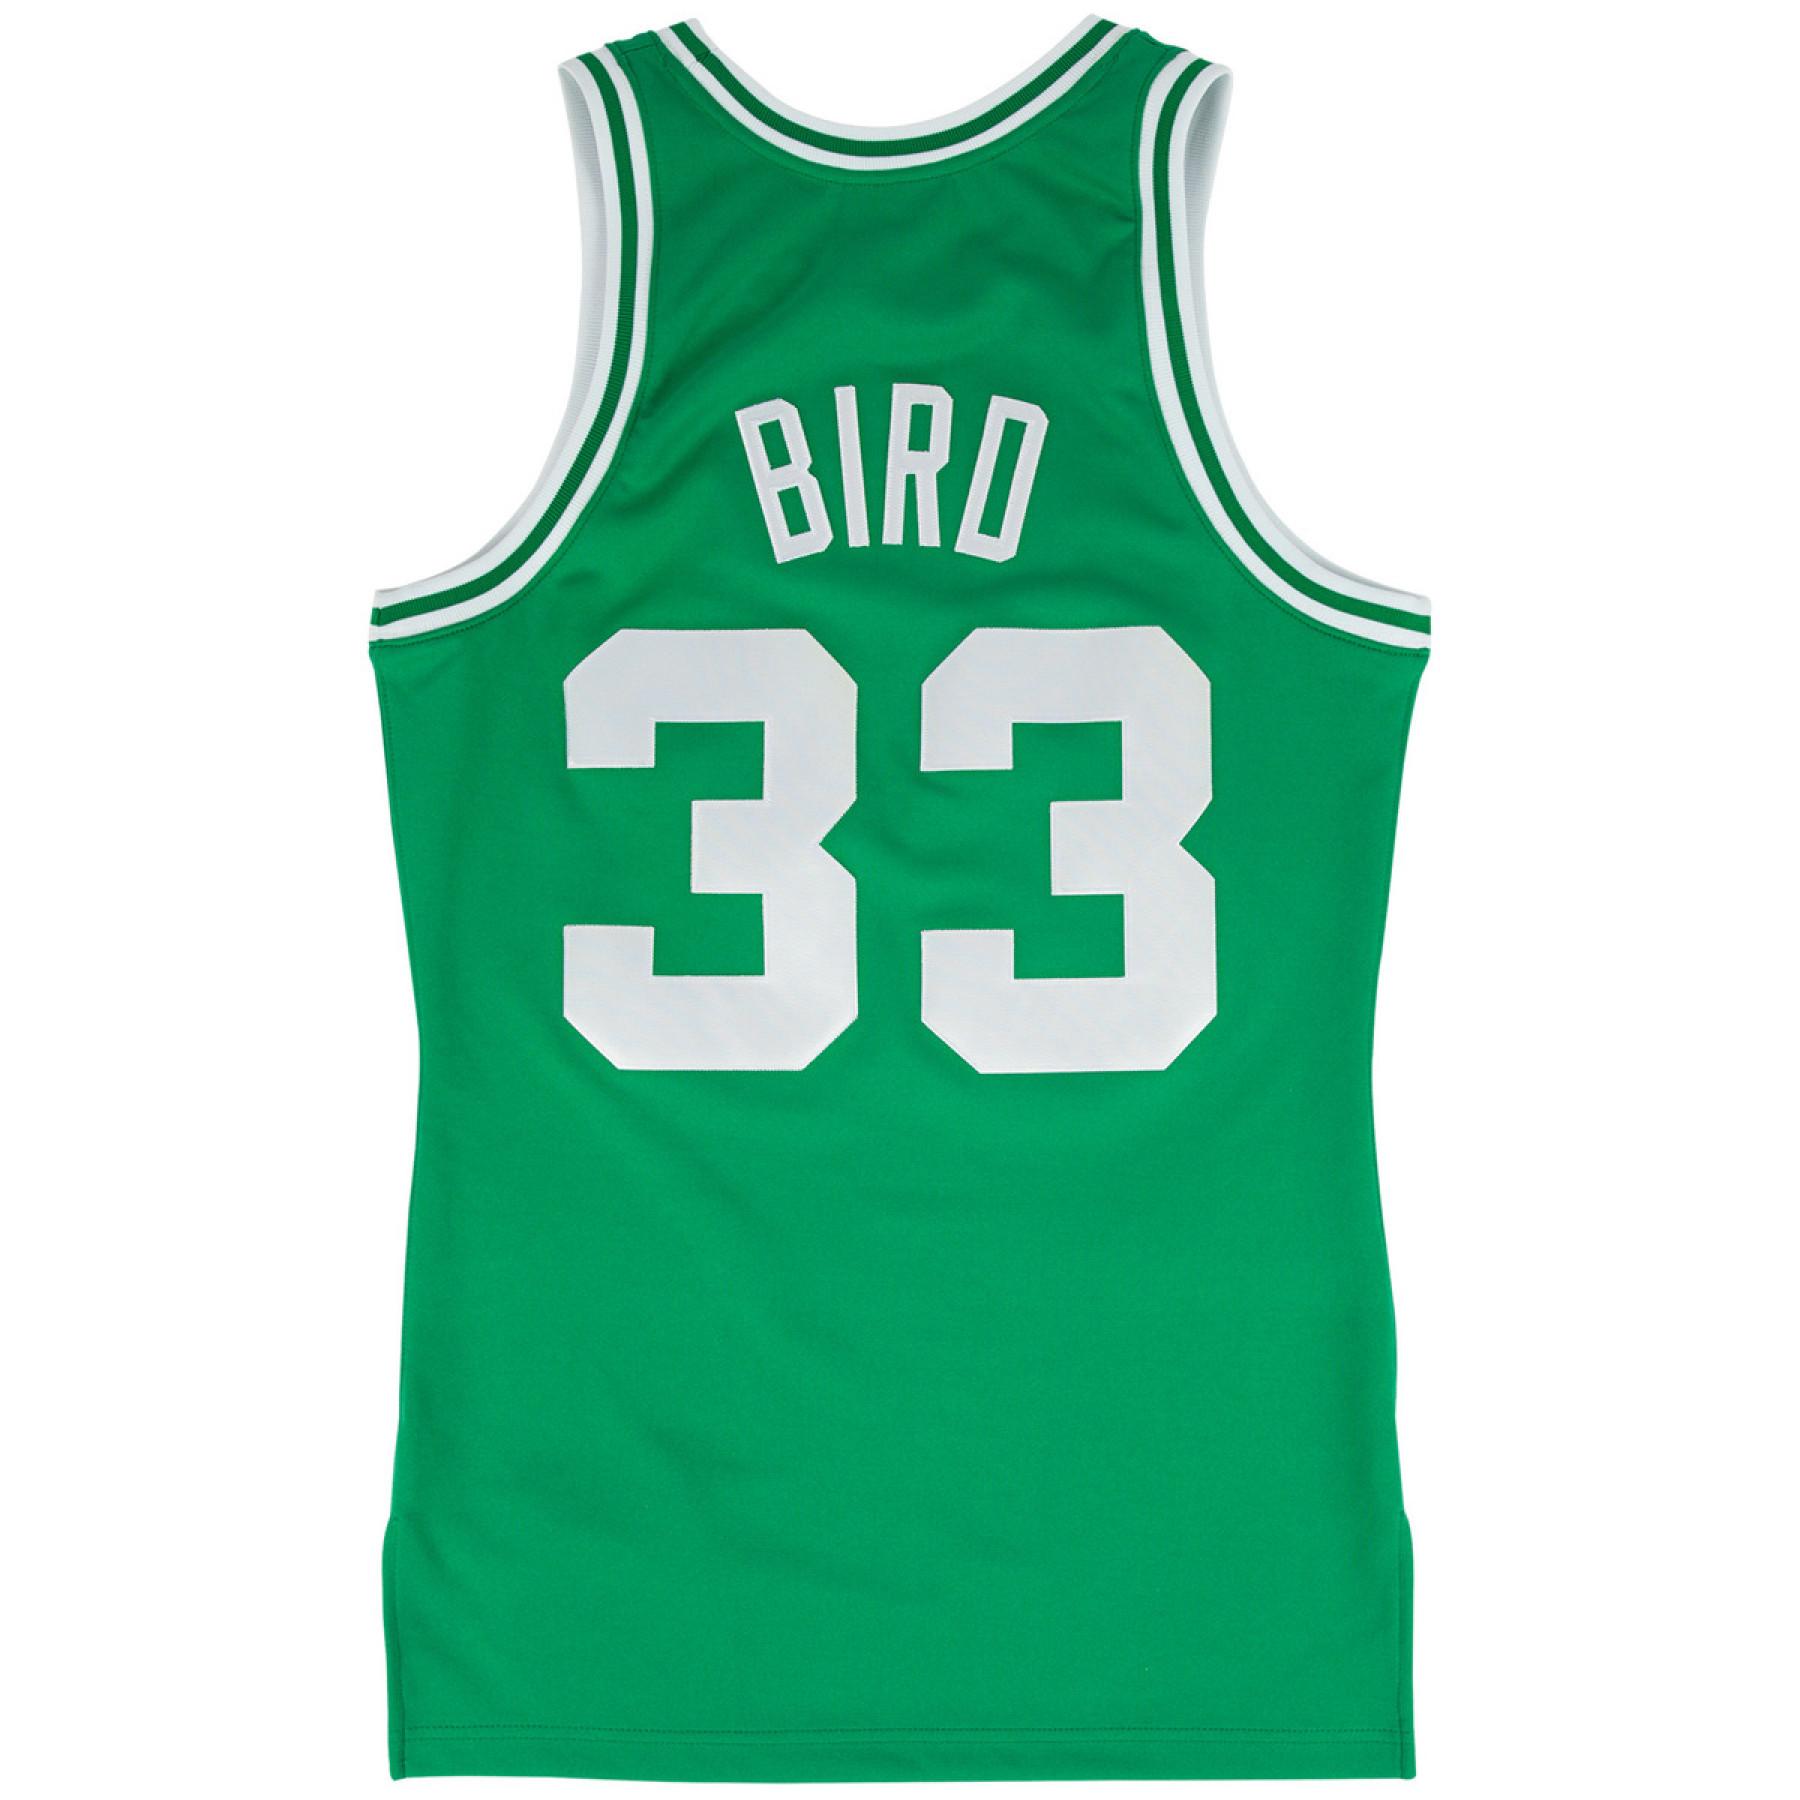 Jersey Boston Celtics nba authentic